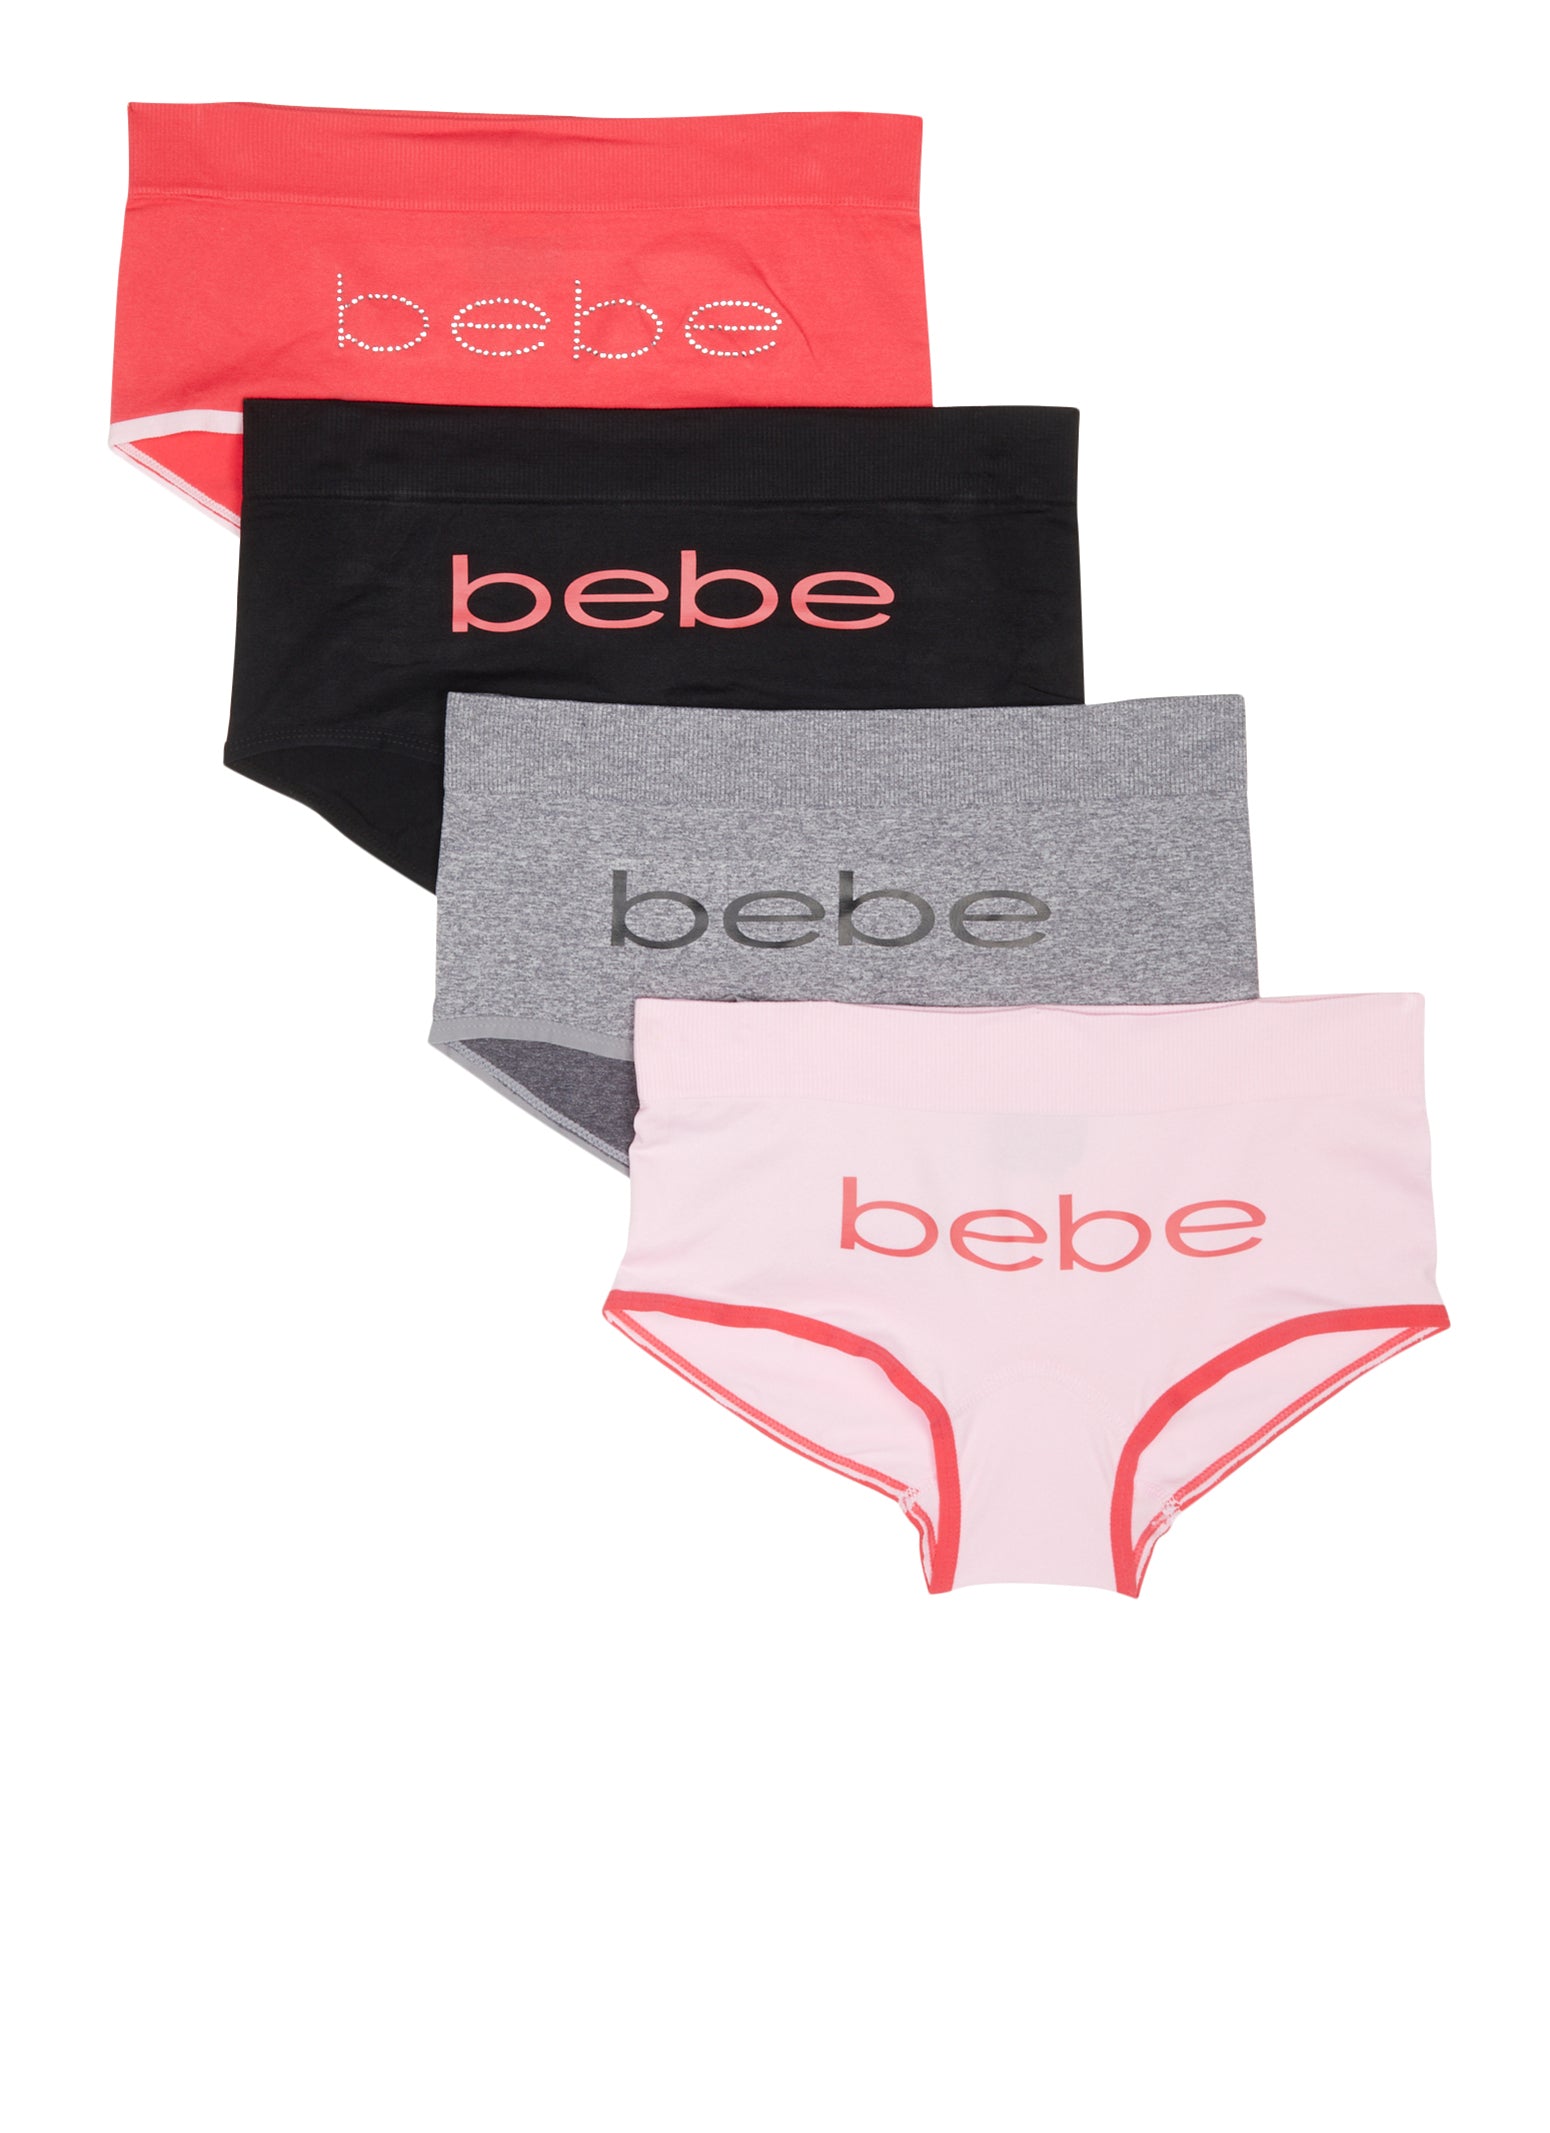 Bebe 4 Pack Rhinestone Graphic Boyshort Panties - Pink Multi